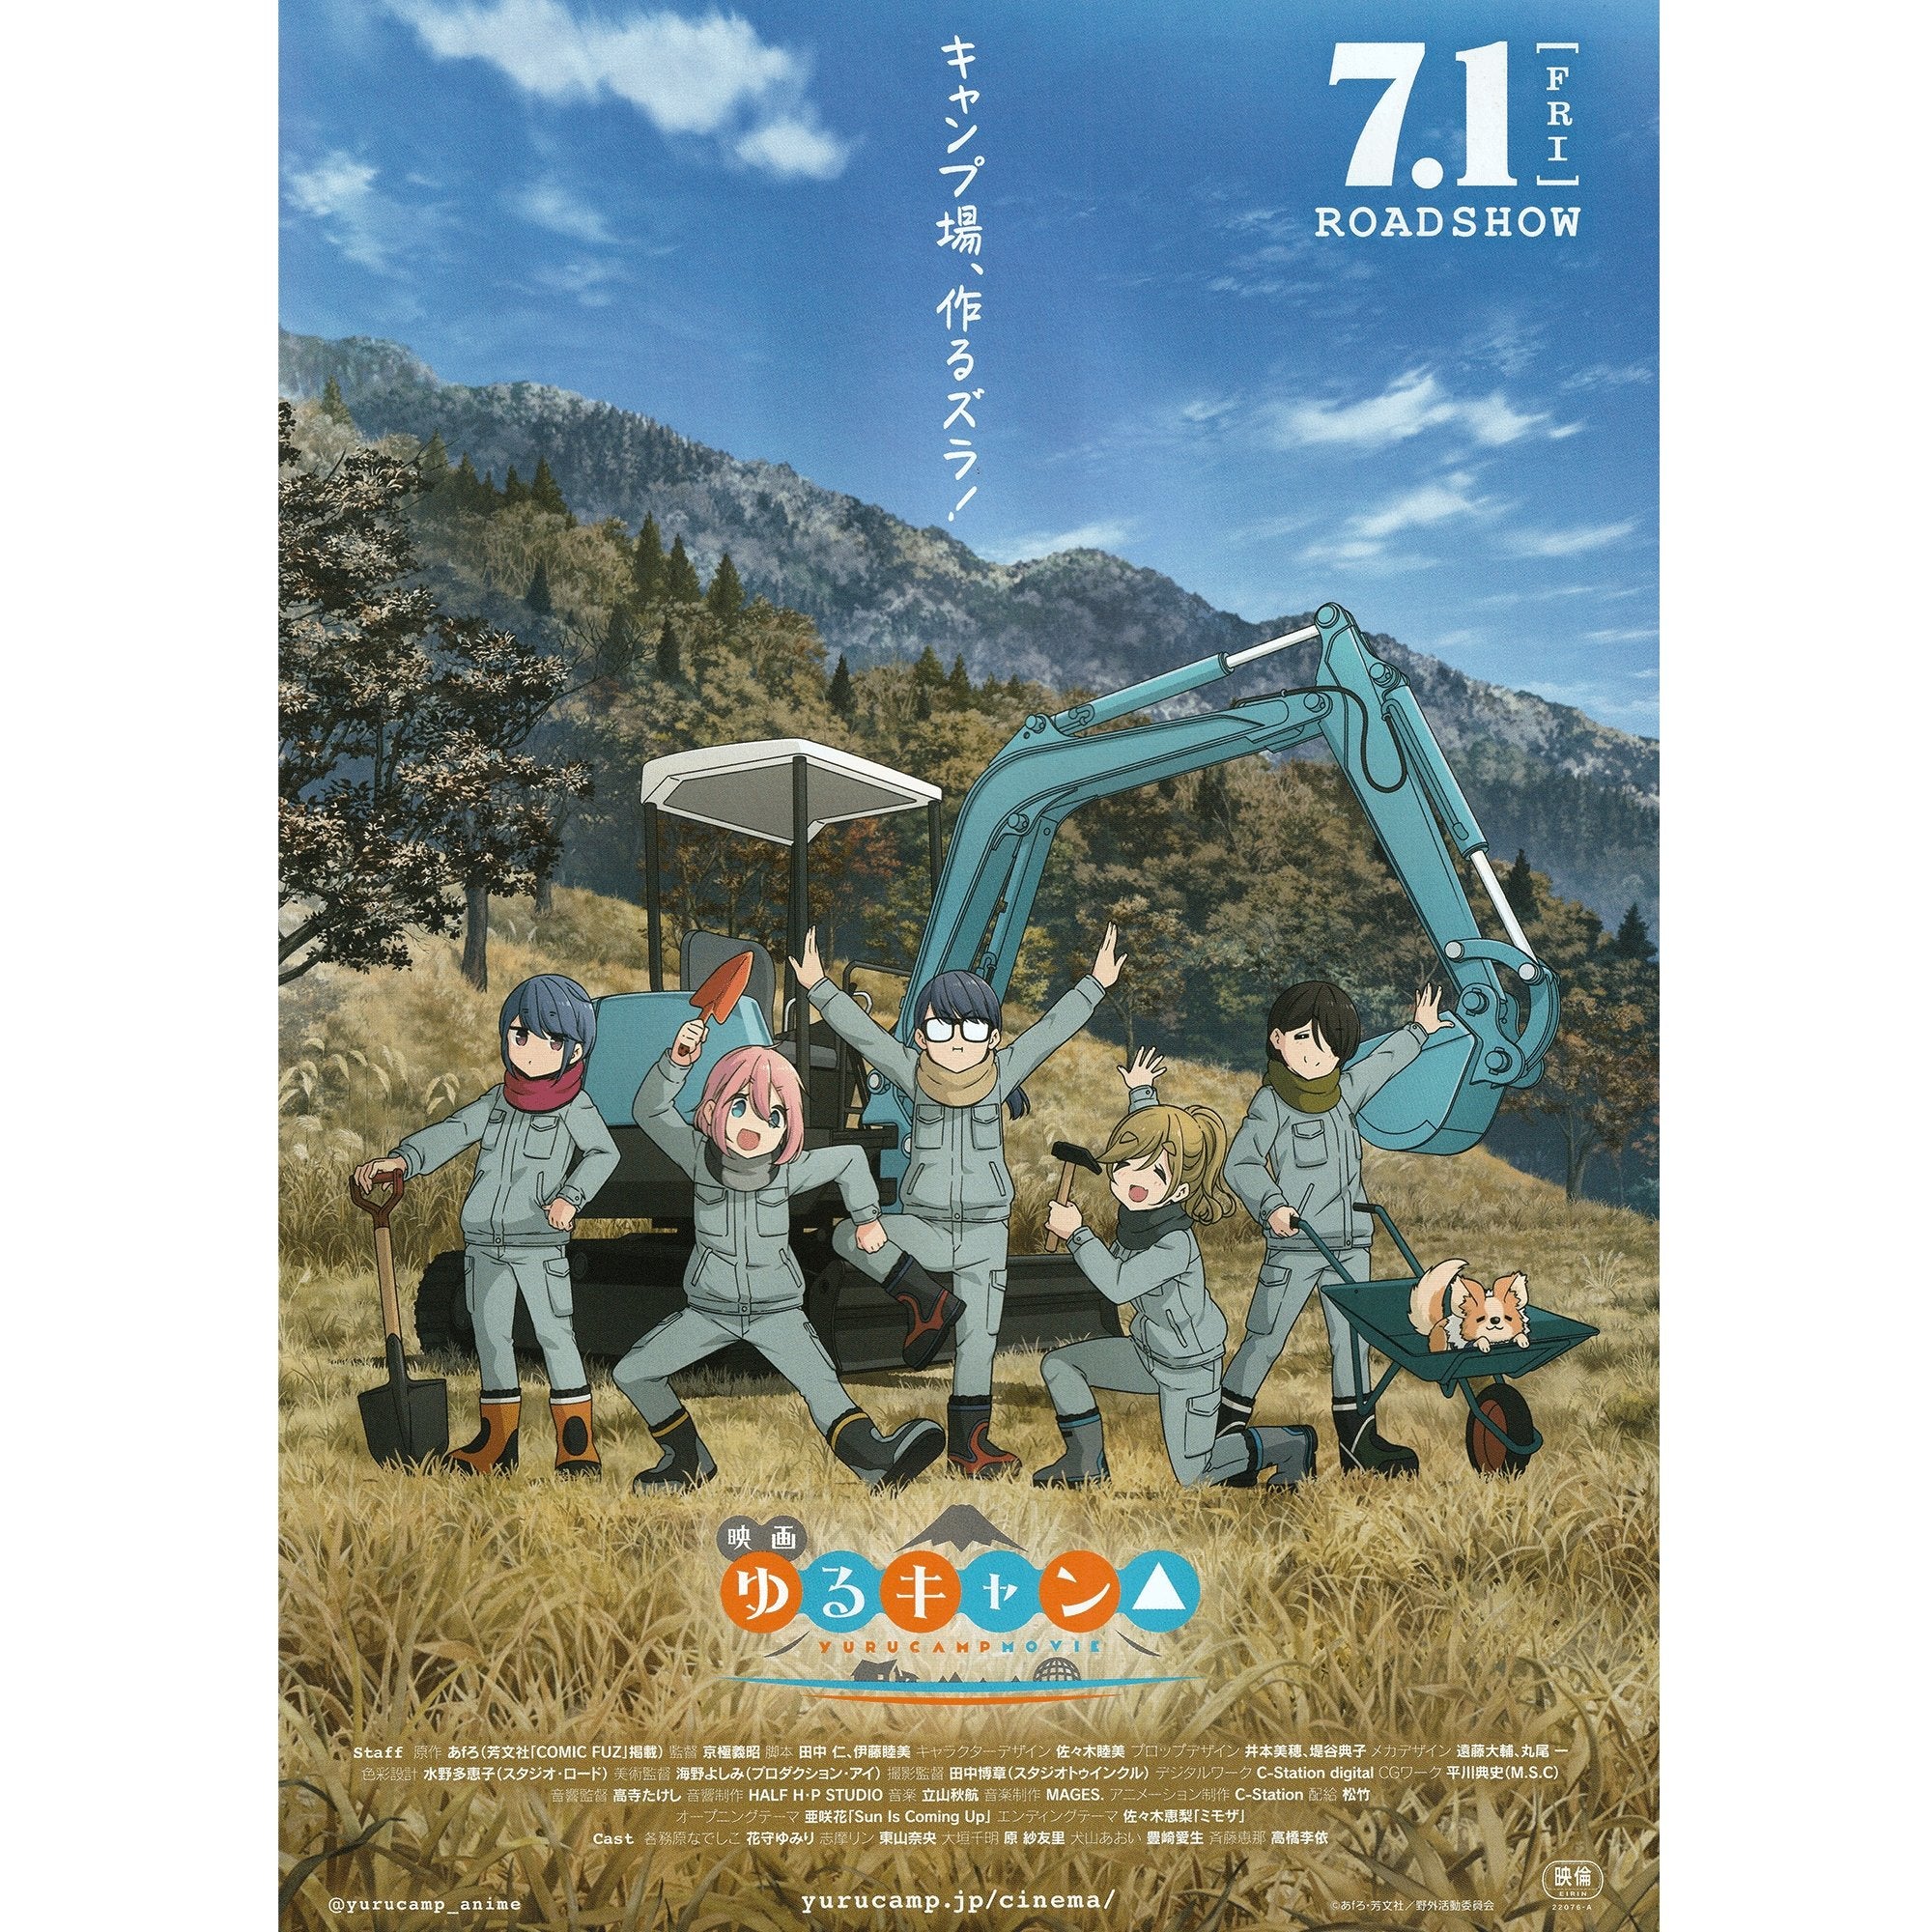 You-Zitsu Classroom of the Elit illustration Anime Manga  Chirashi/Flyer/Poster